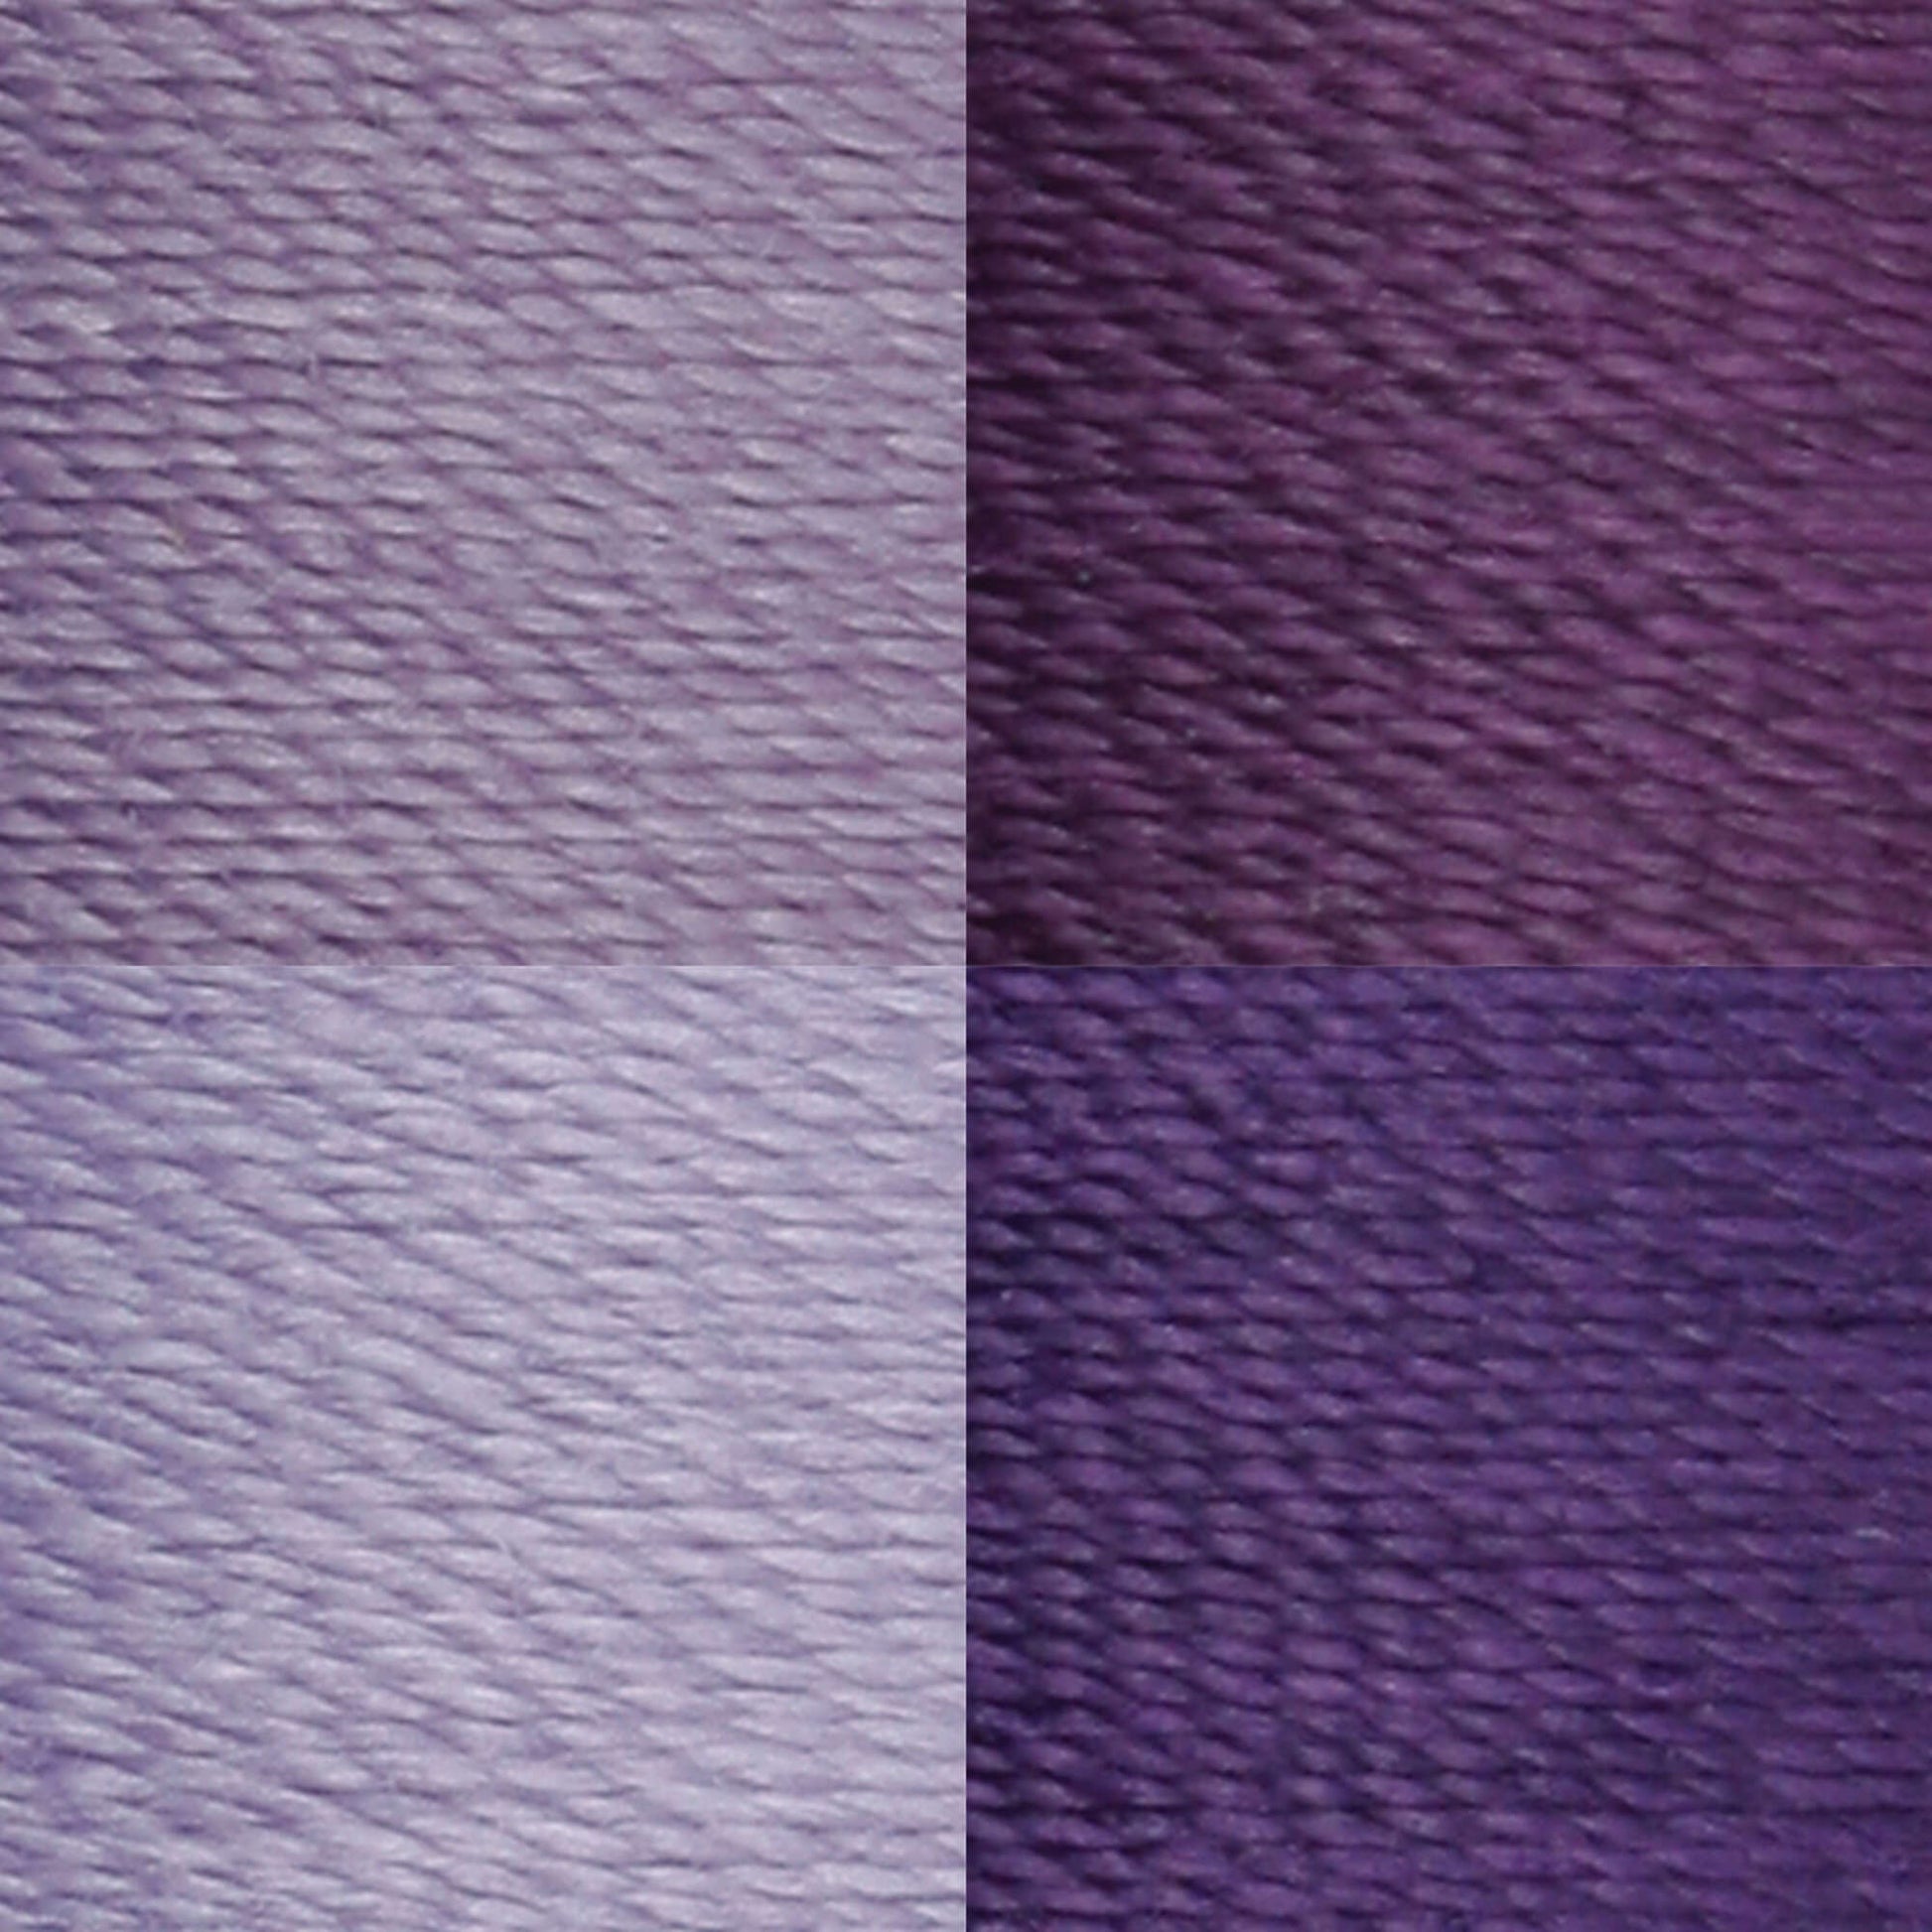 Dual Duty XP All Purpose Sewing Thread, 4 Spools Purples